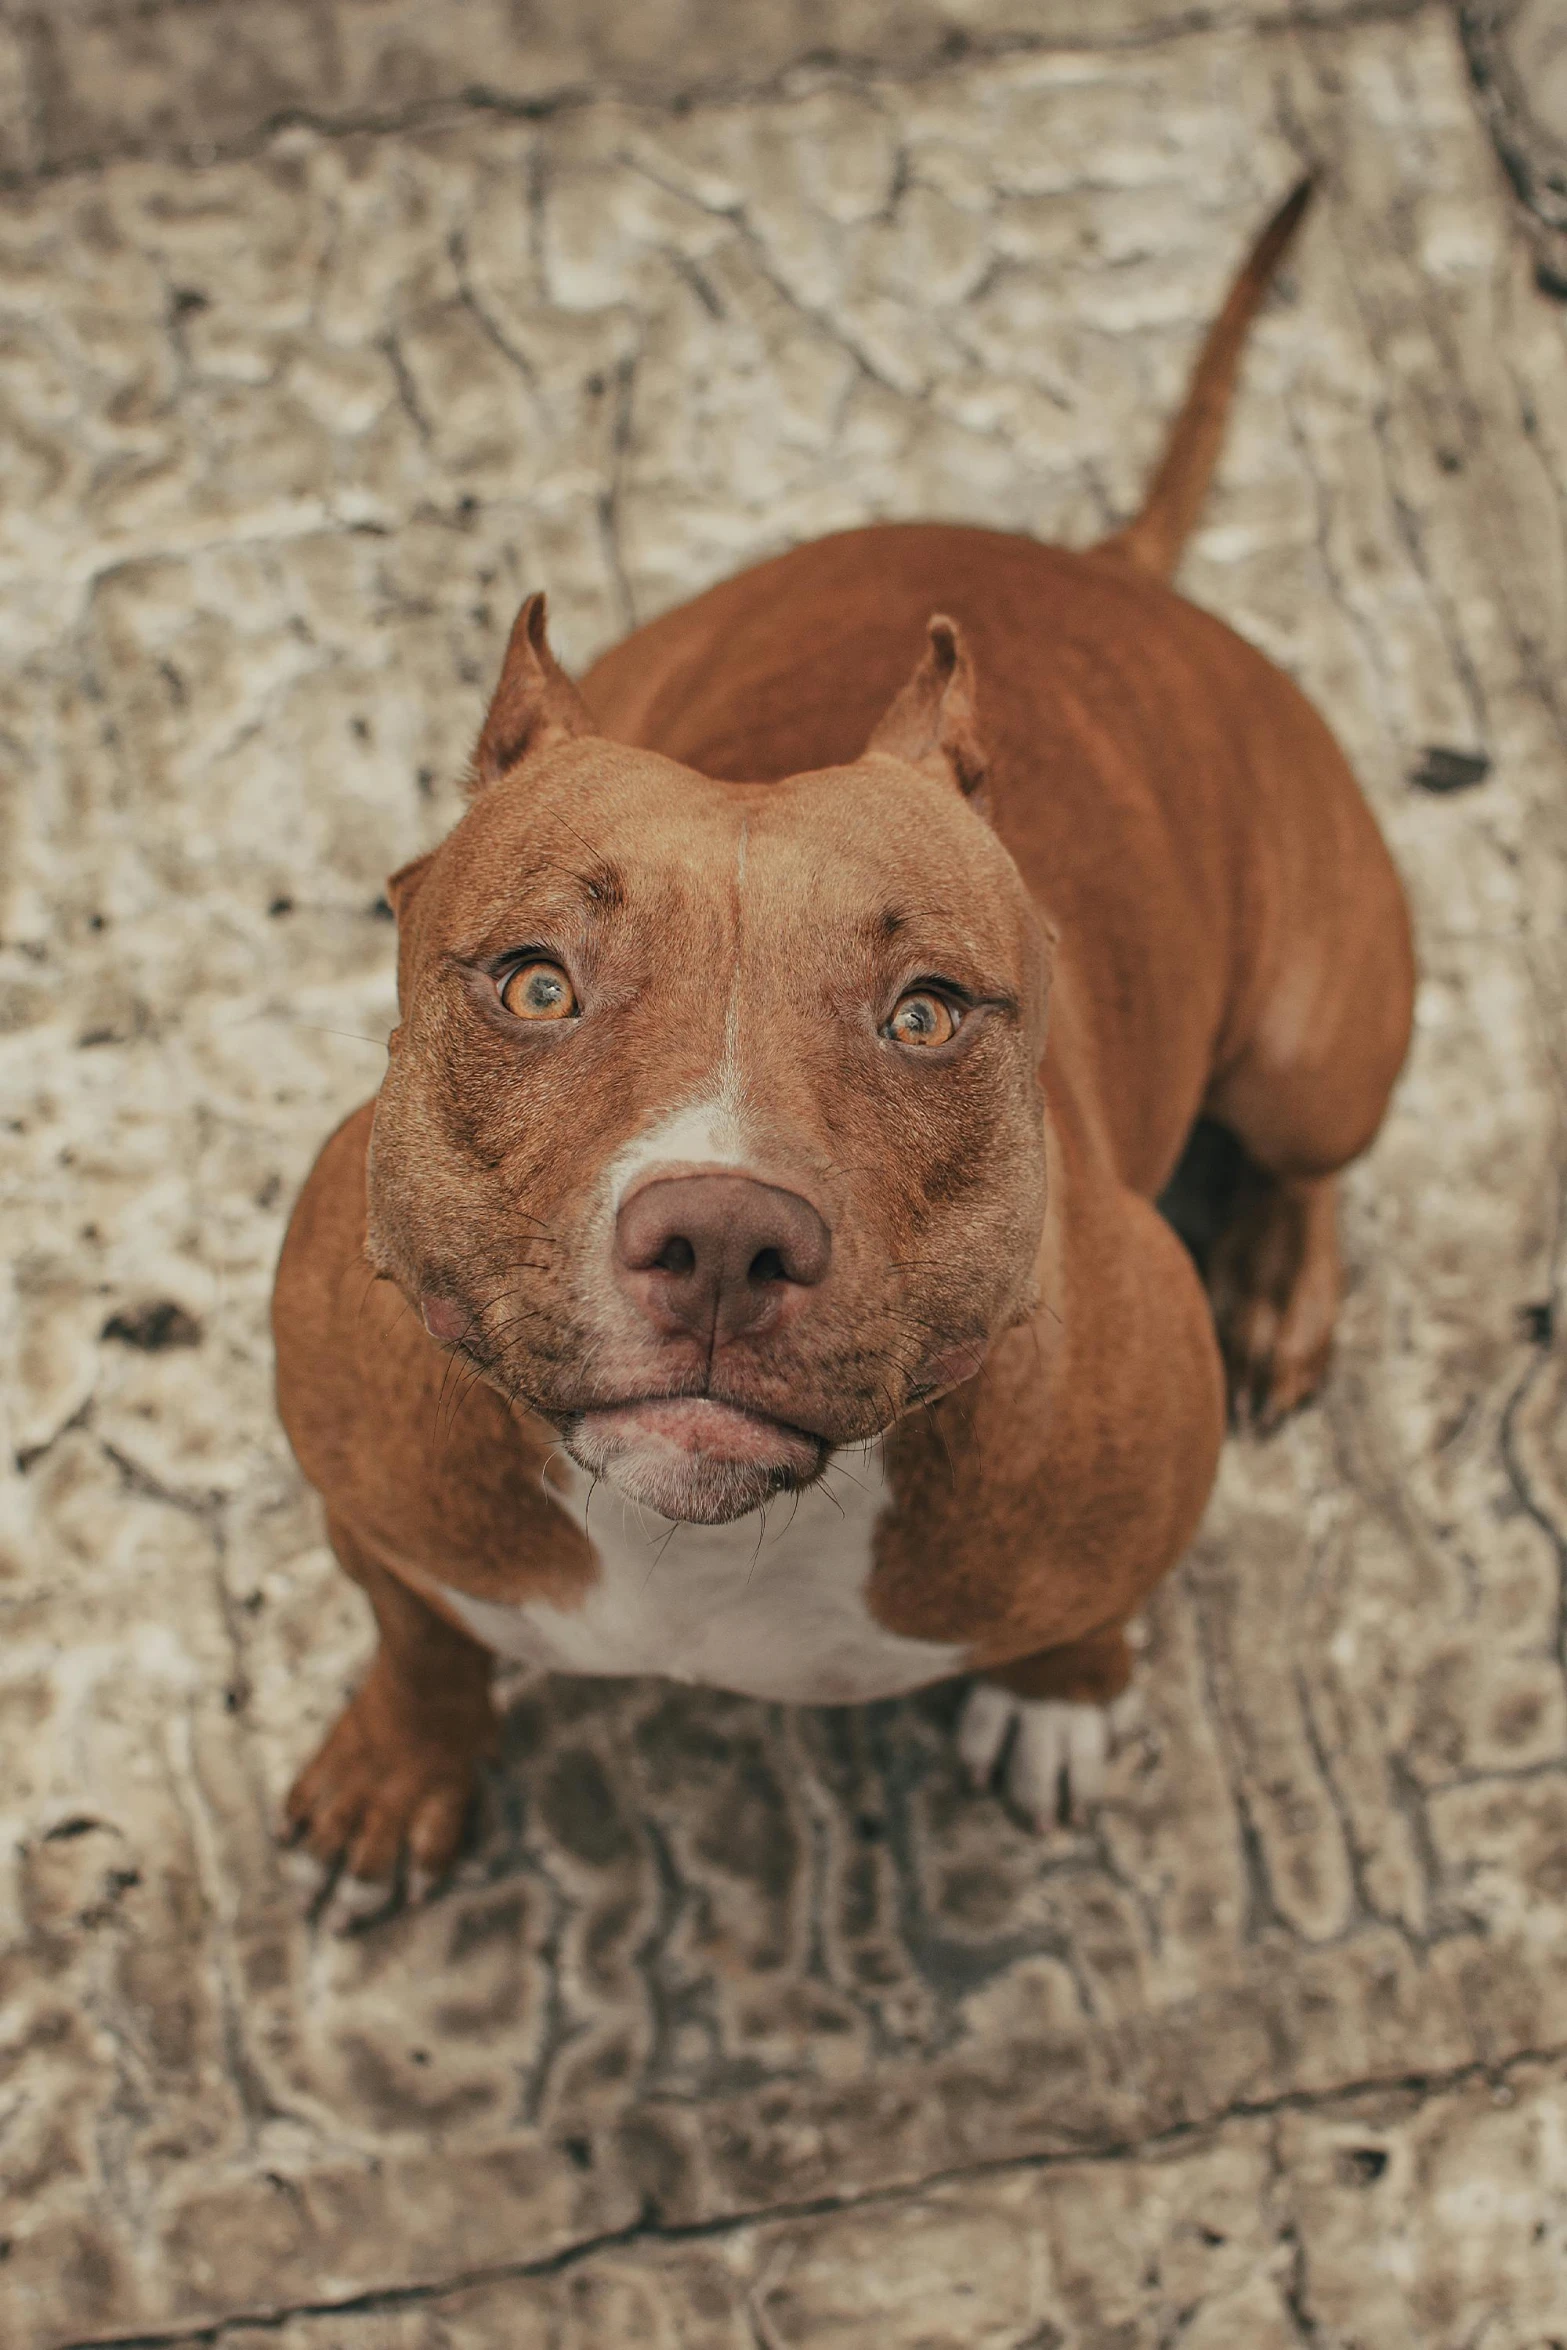 a brown and white dog sitting on a tile floor, an album cover, trending on pexels, renaissance, cyborg - pitbull, mid 2 0's female, large piercing eyes, reddish